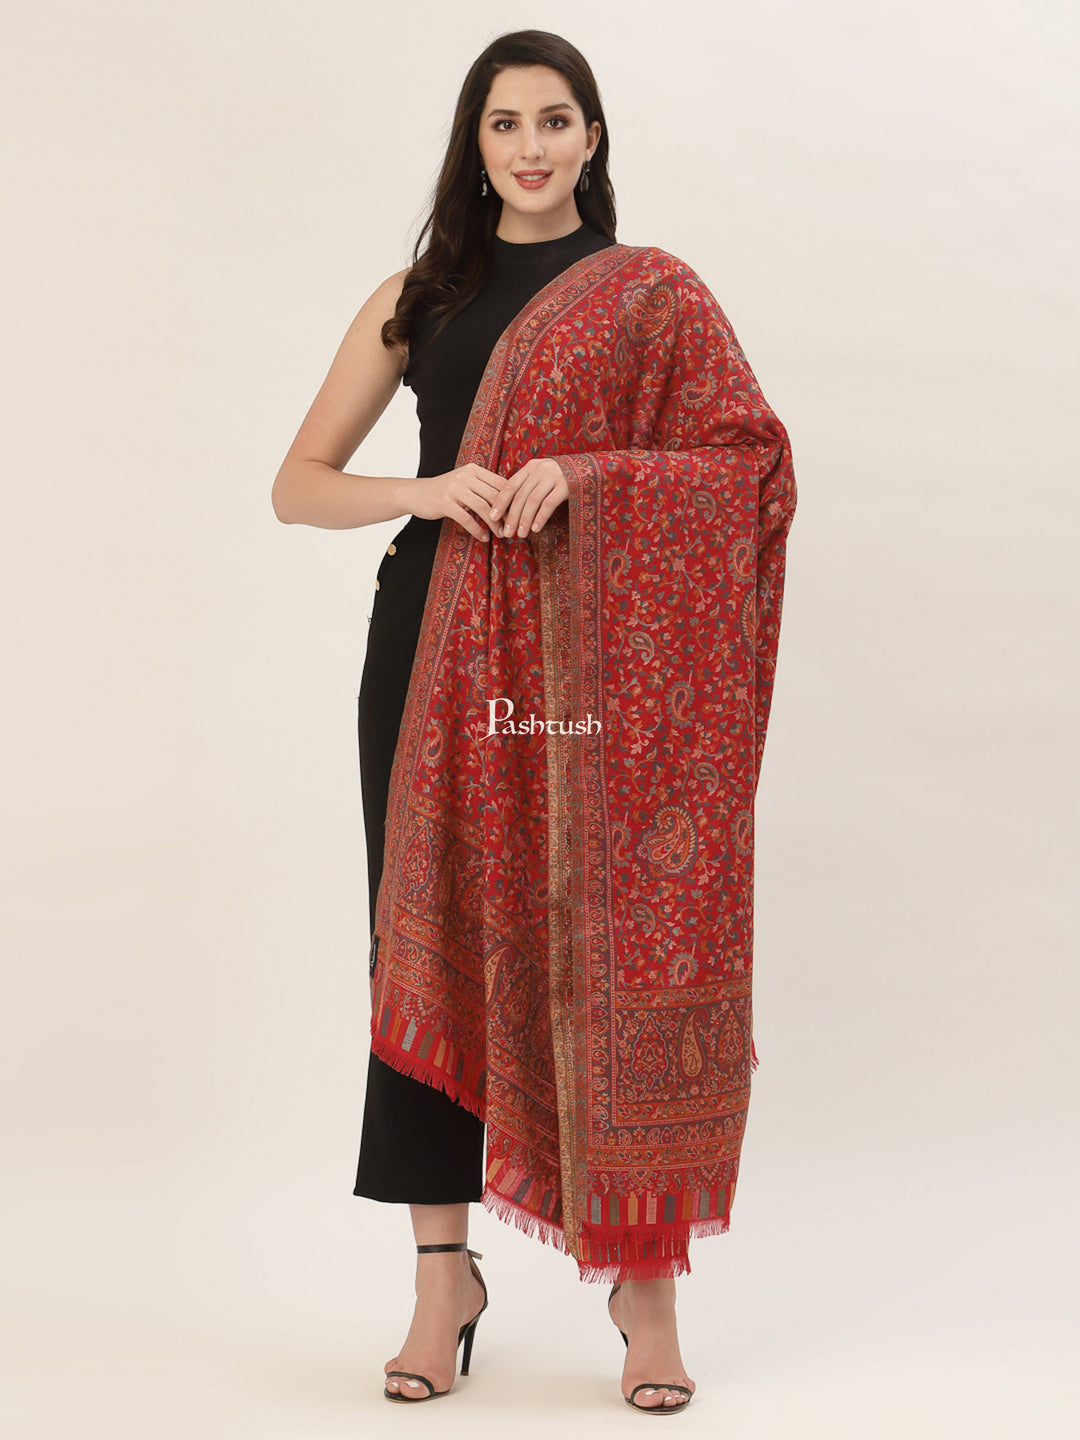 Pashwool Womens Shawls Pashtush Womens Woollen Jacquard Design Shawl, Soft And Warm, Light Weight